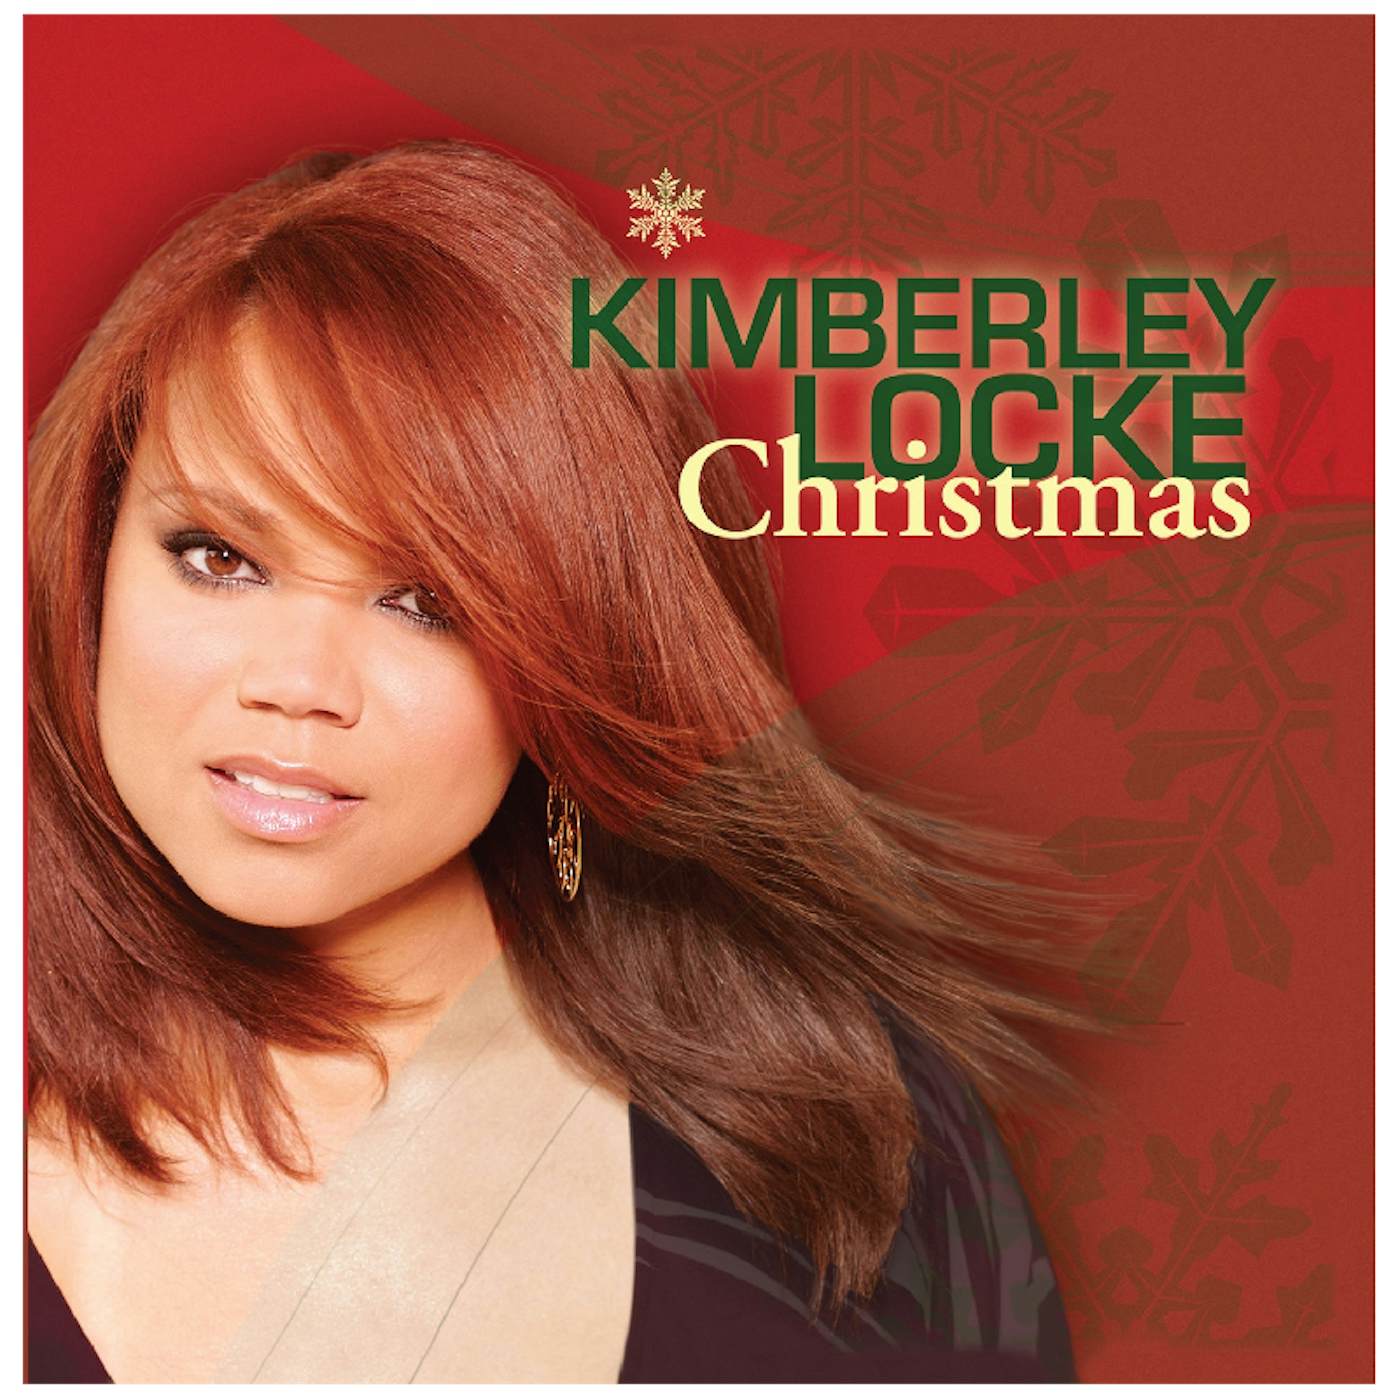 Kimberley Locke Christmas CD